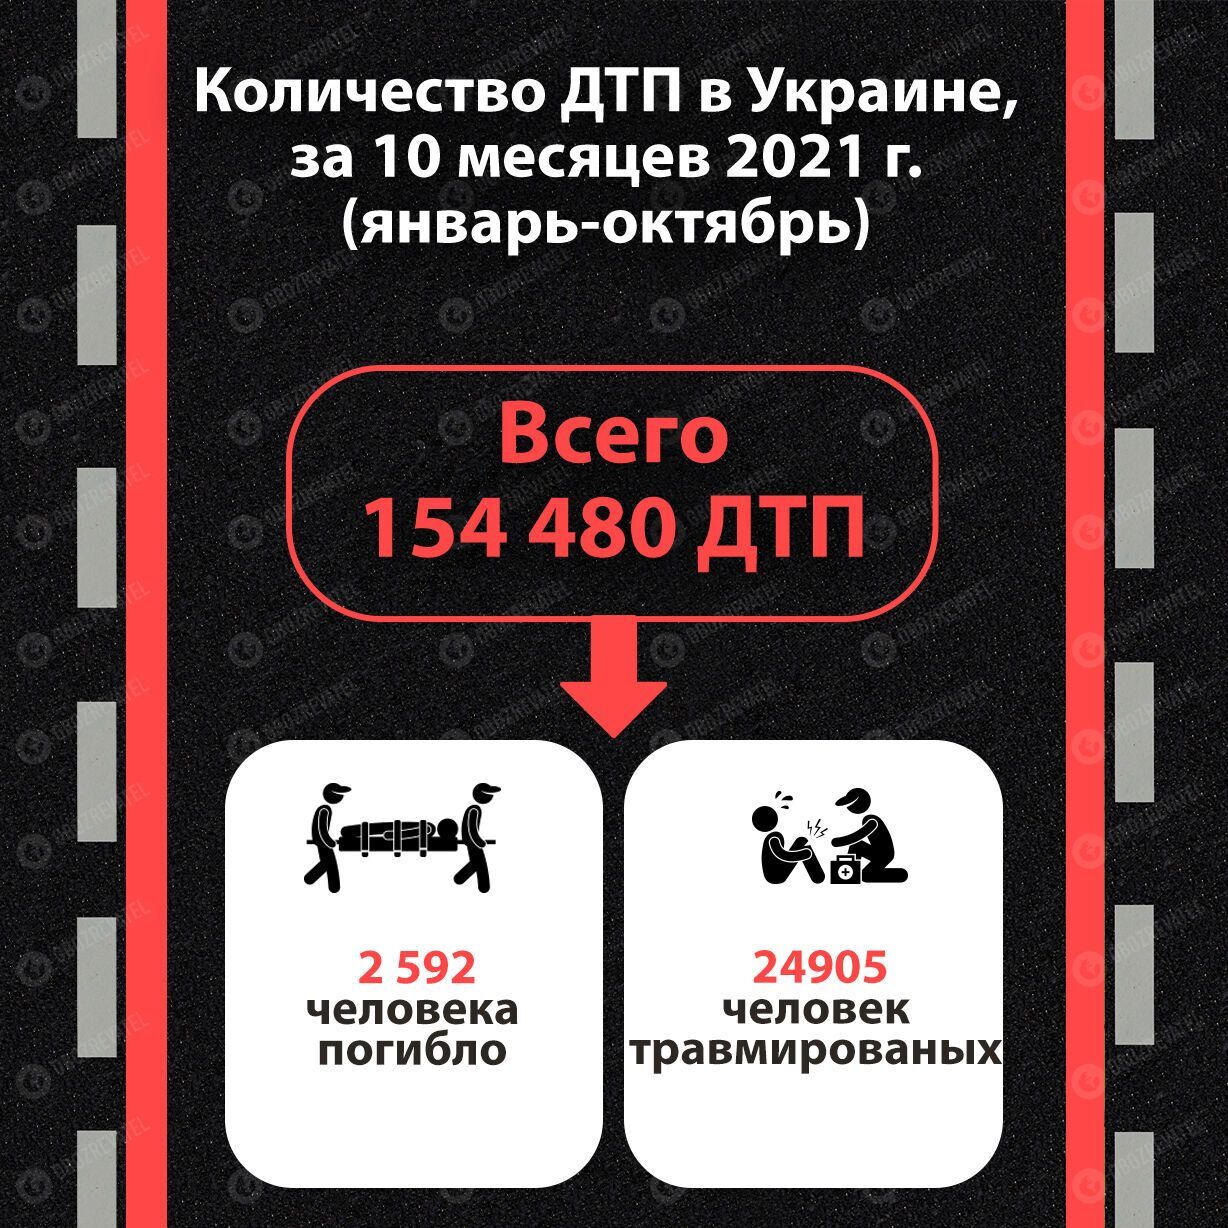 Статистика ДТП за 10 месяцев 2021 года в Украине